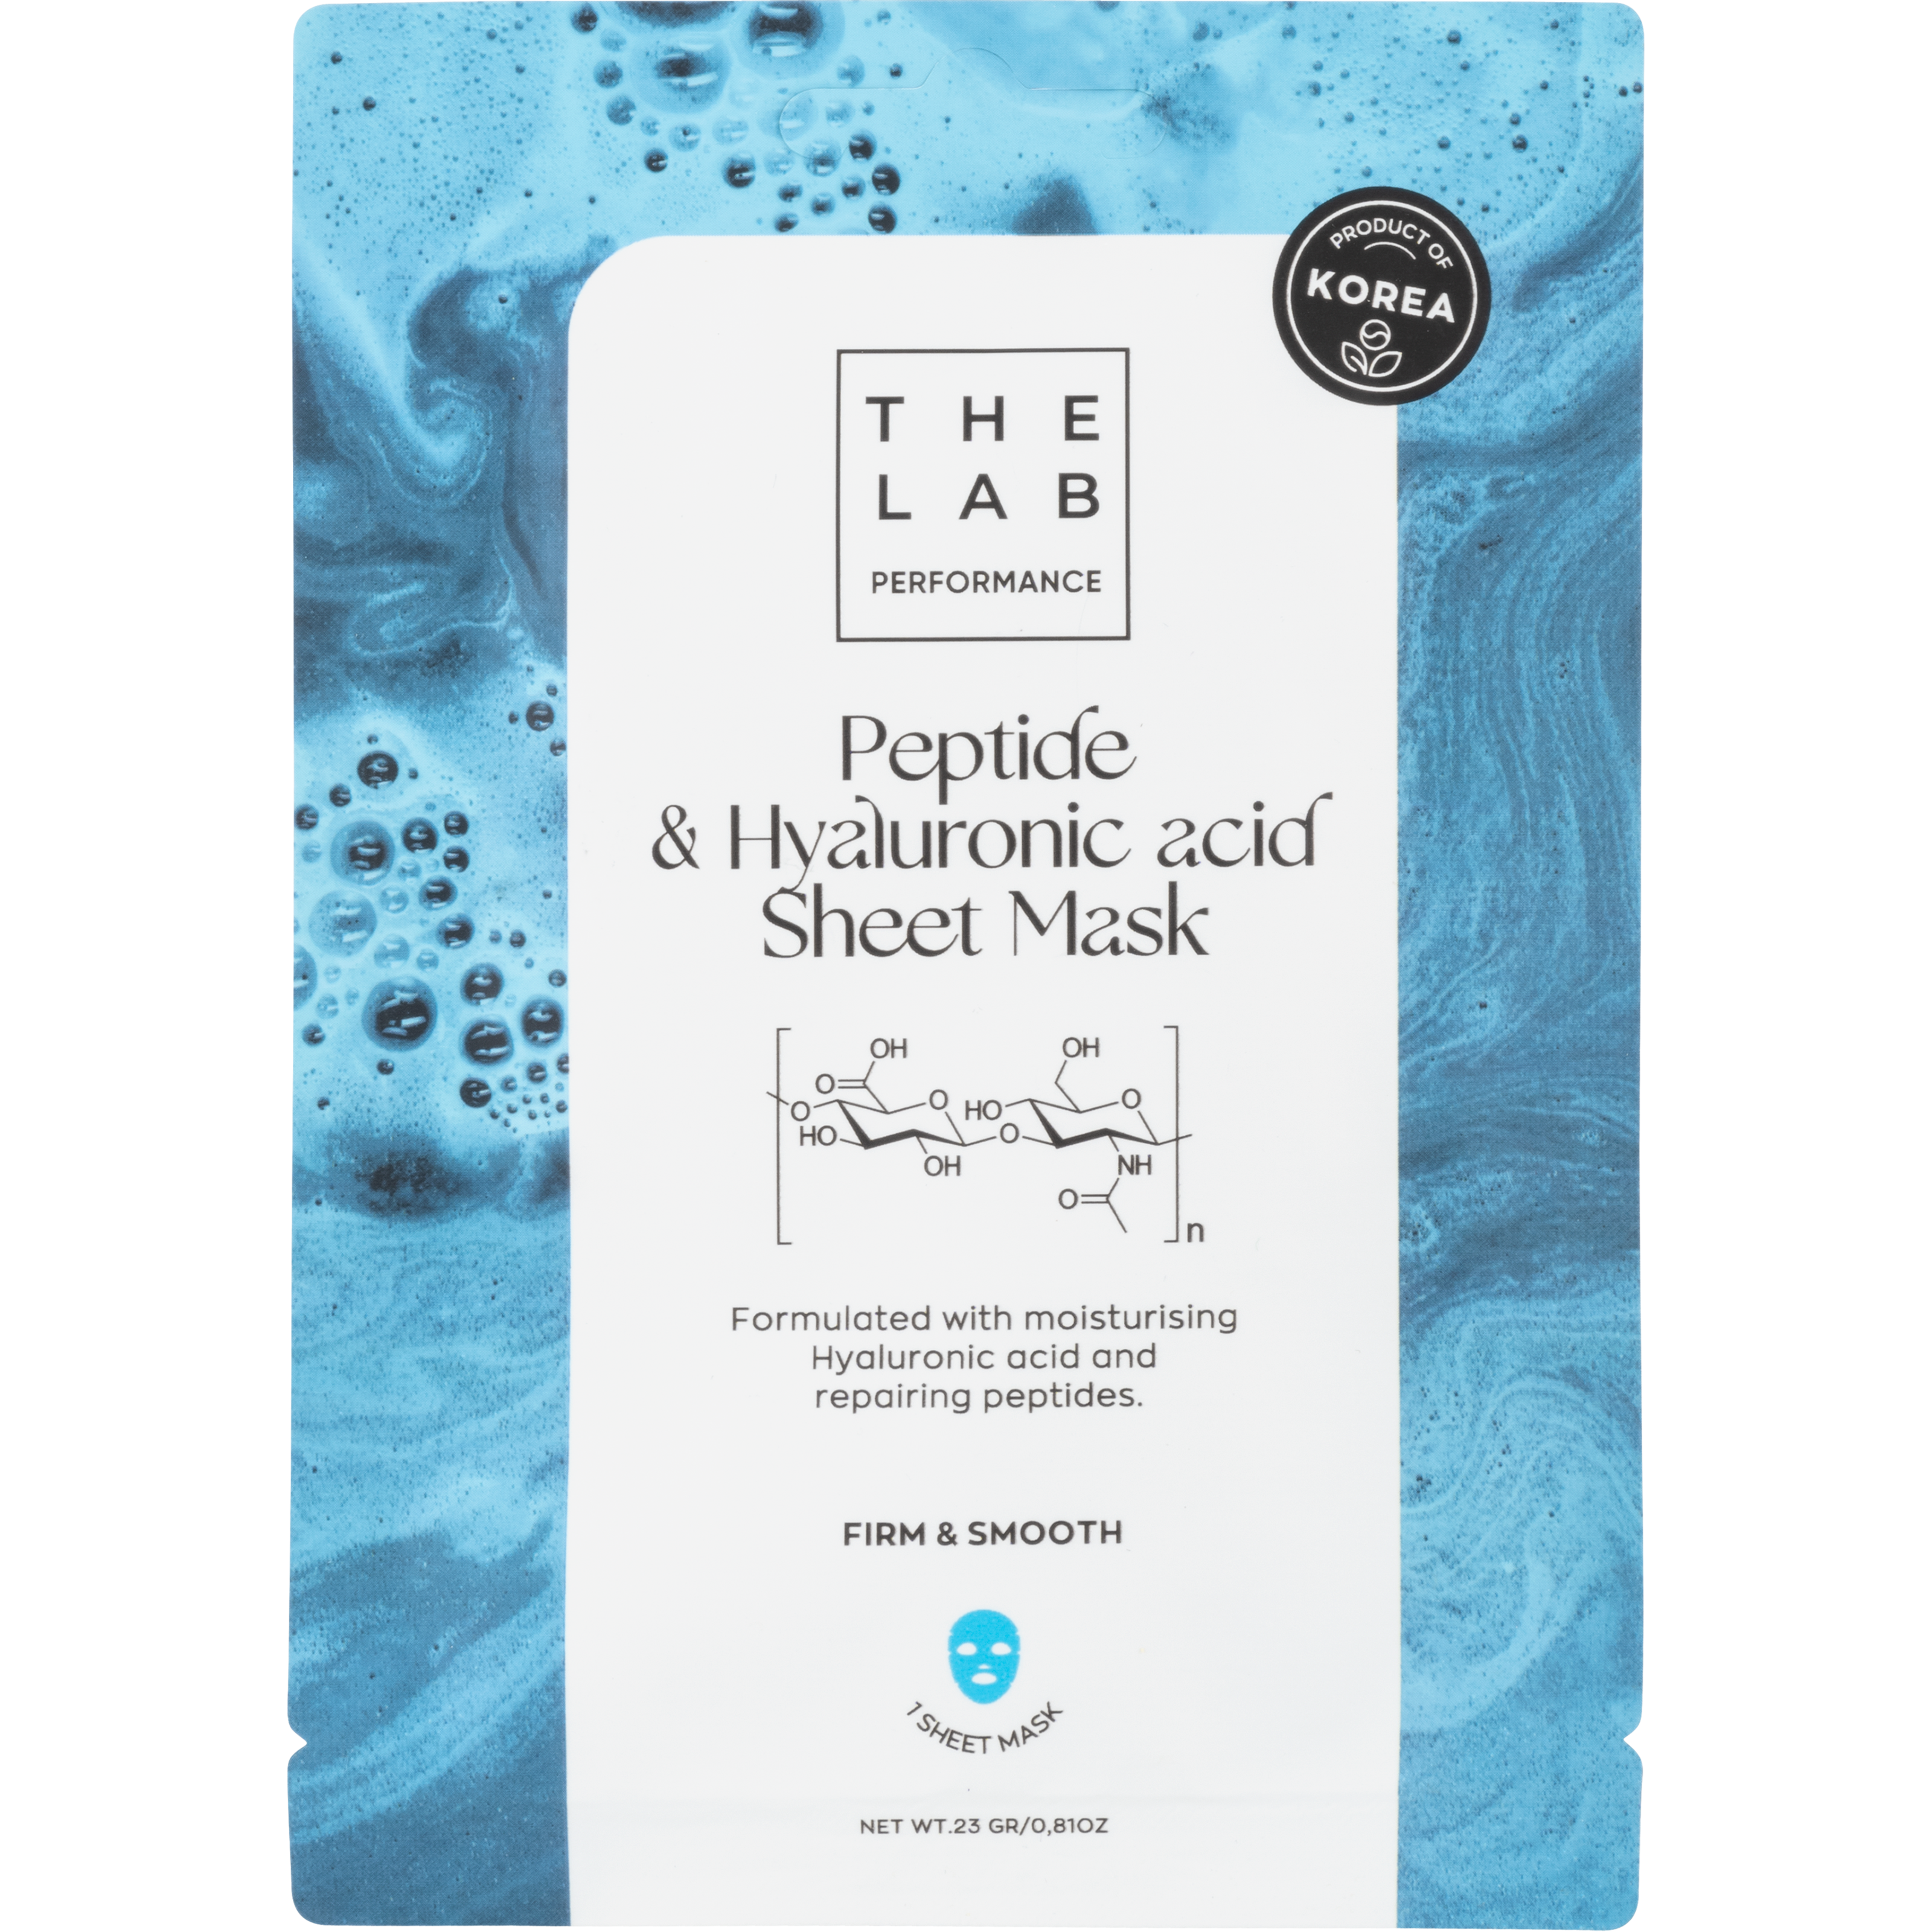 The Lab Performance Peptide & Hyaluronic Acid Sheet Mask